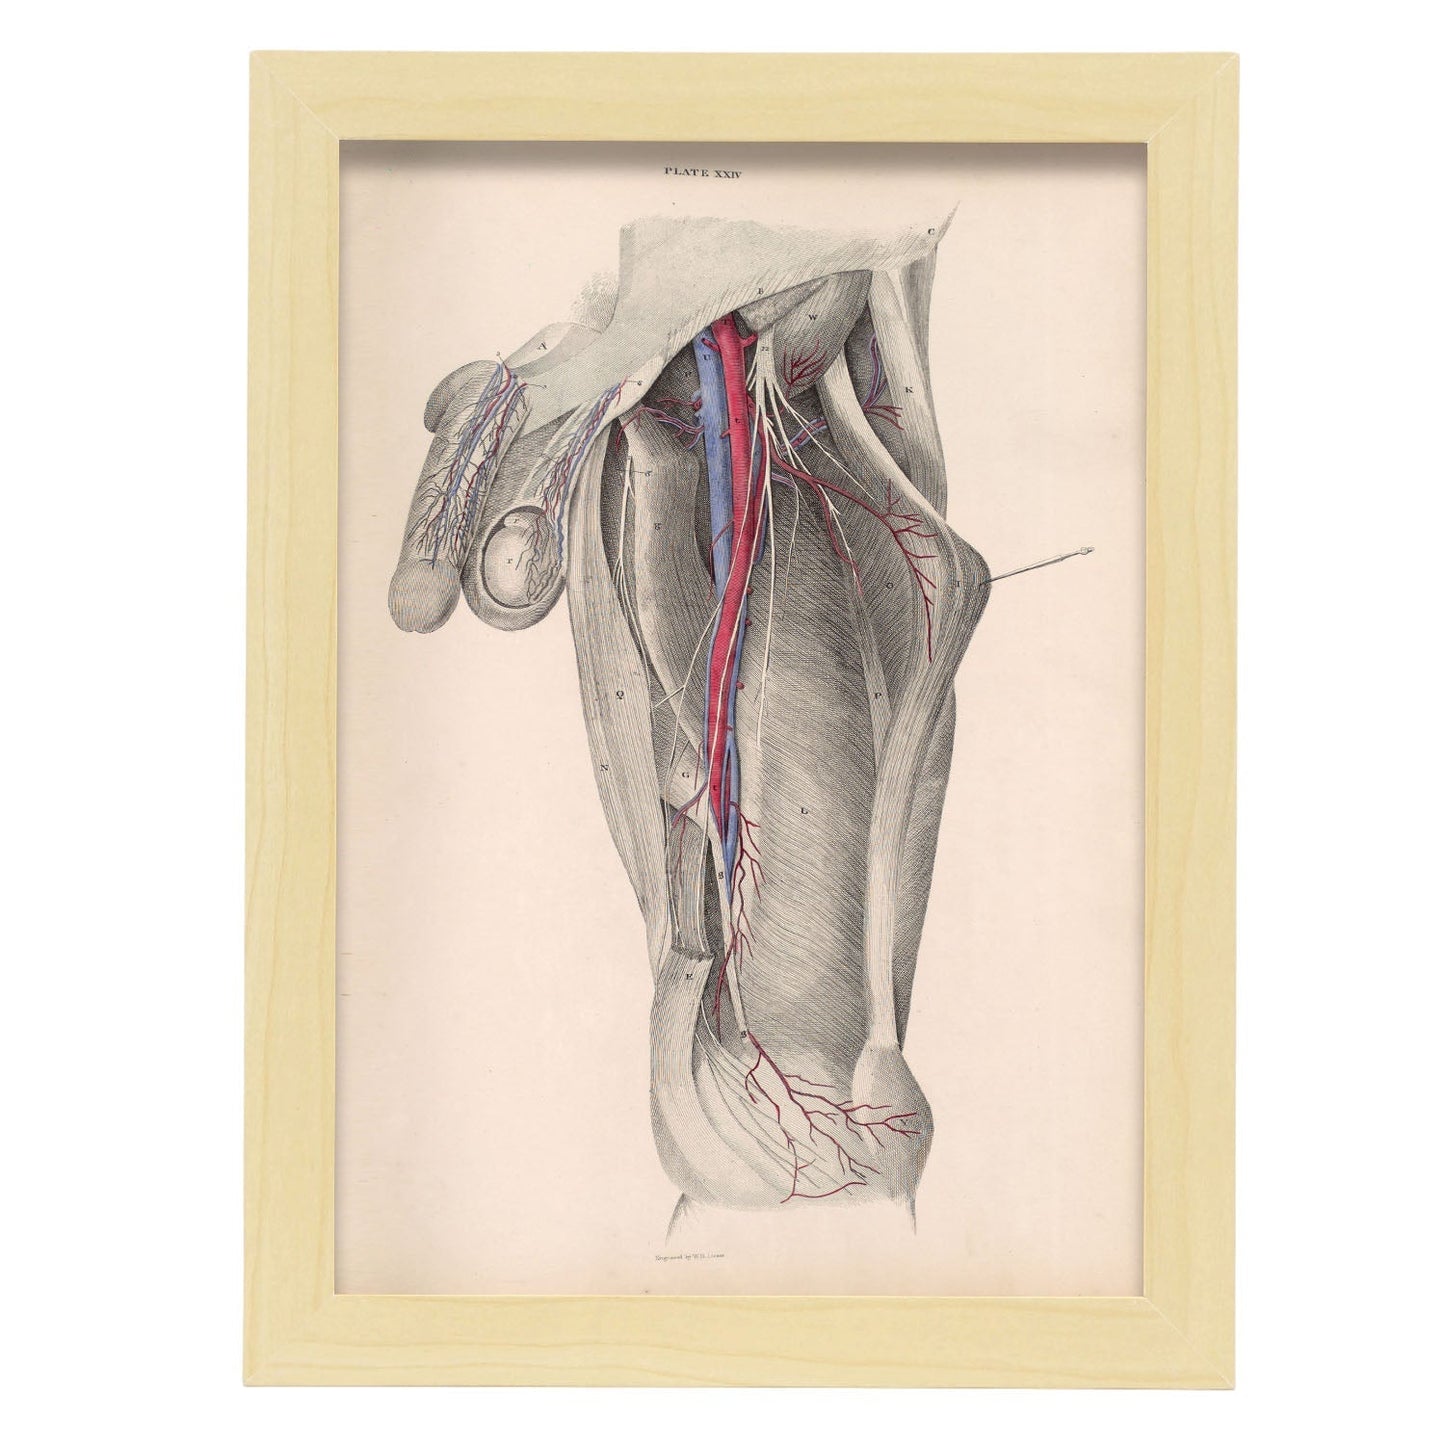 Dissection of the groin-Artwork-Nacnic-A4-Marco Madera clara-Nacnic Estudio SL